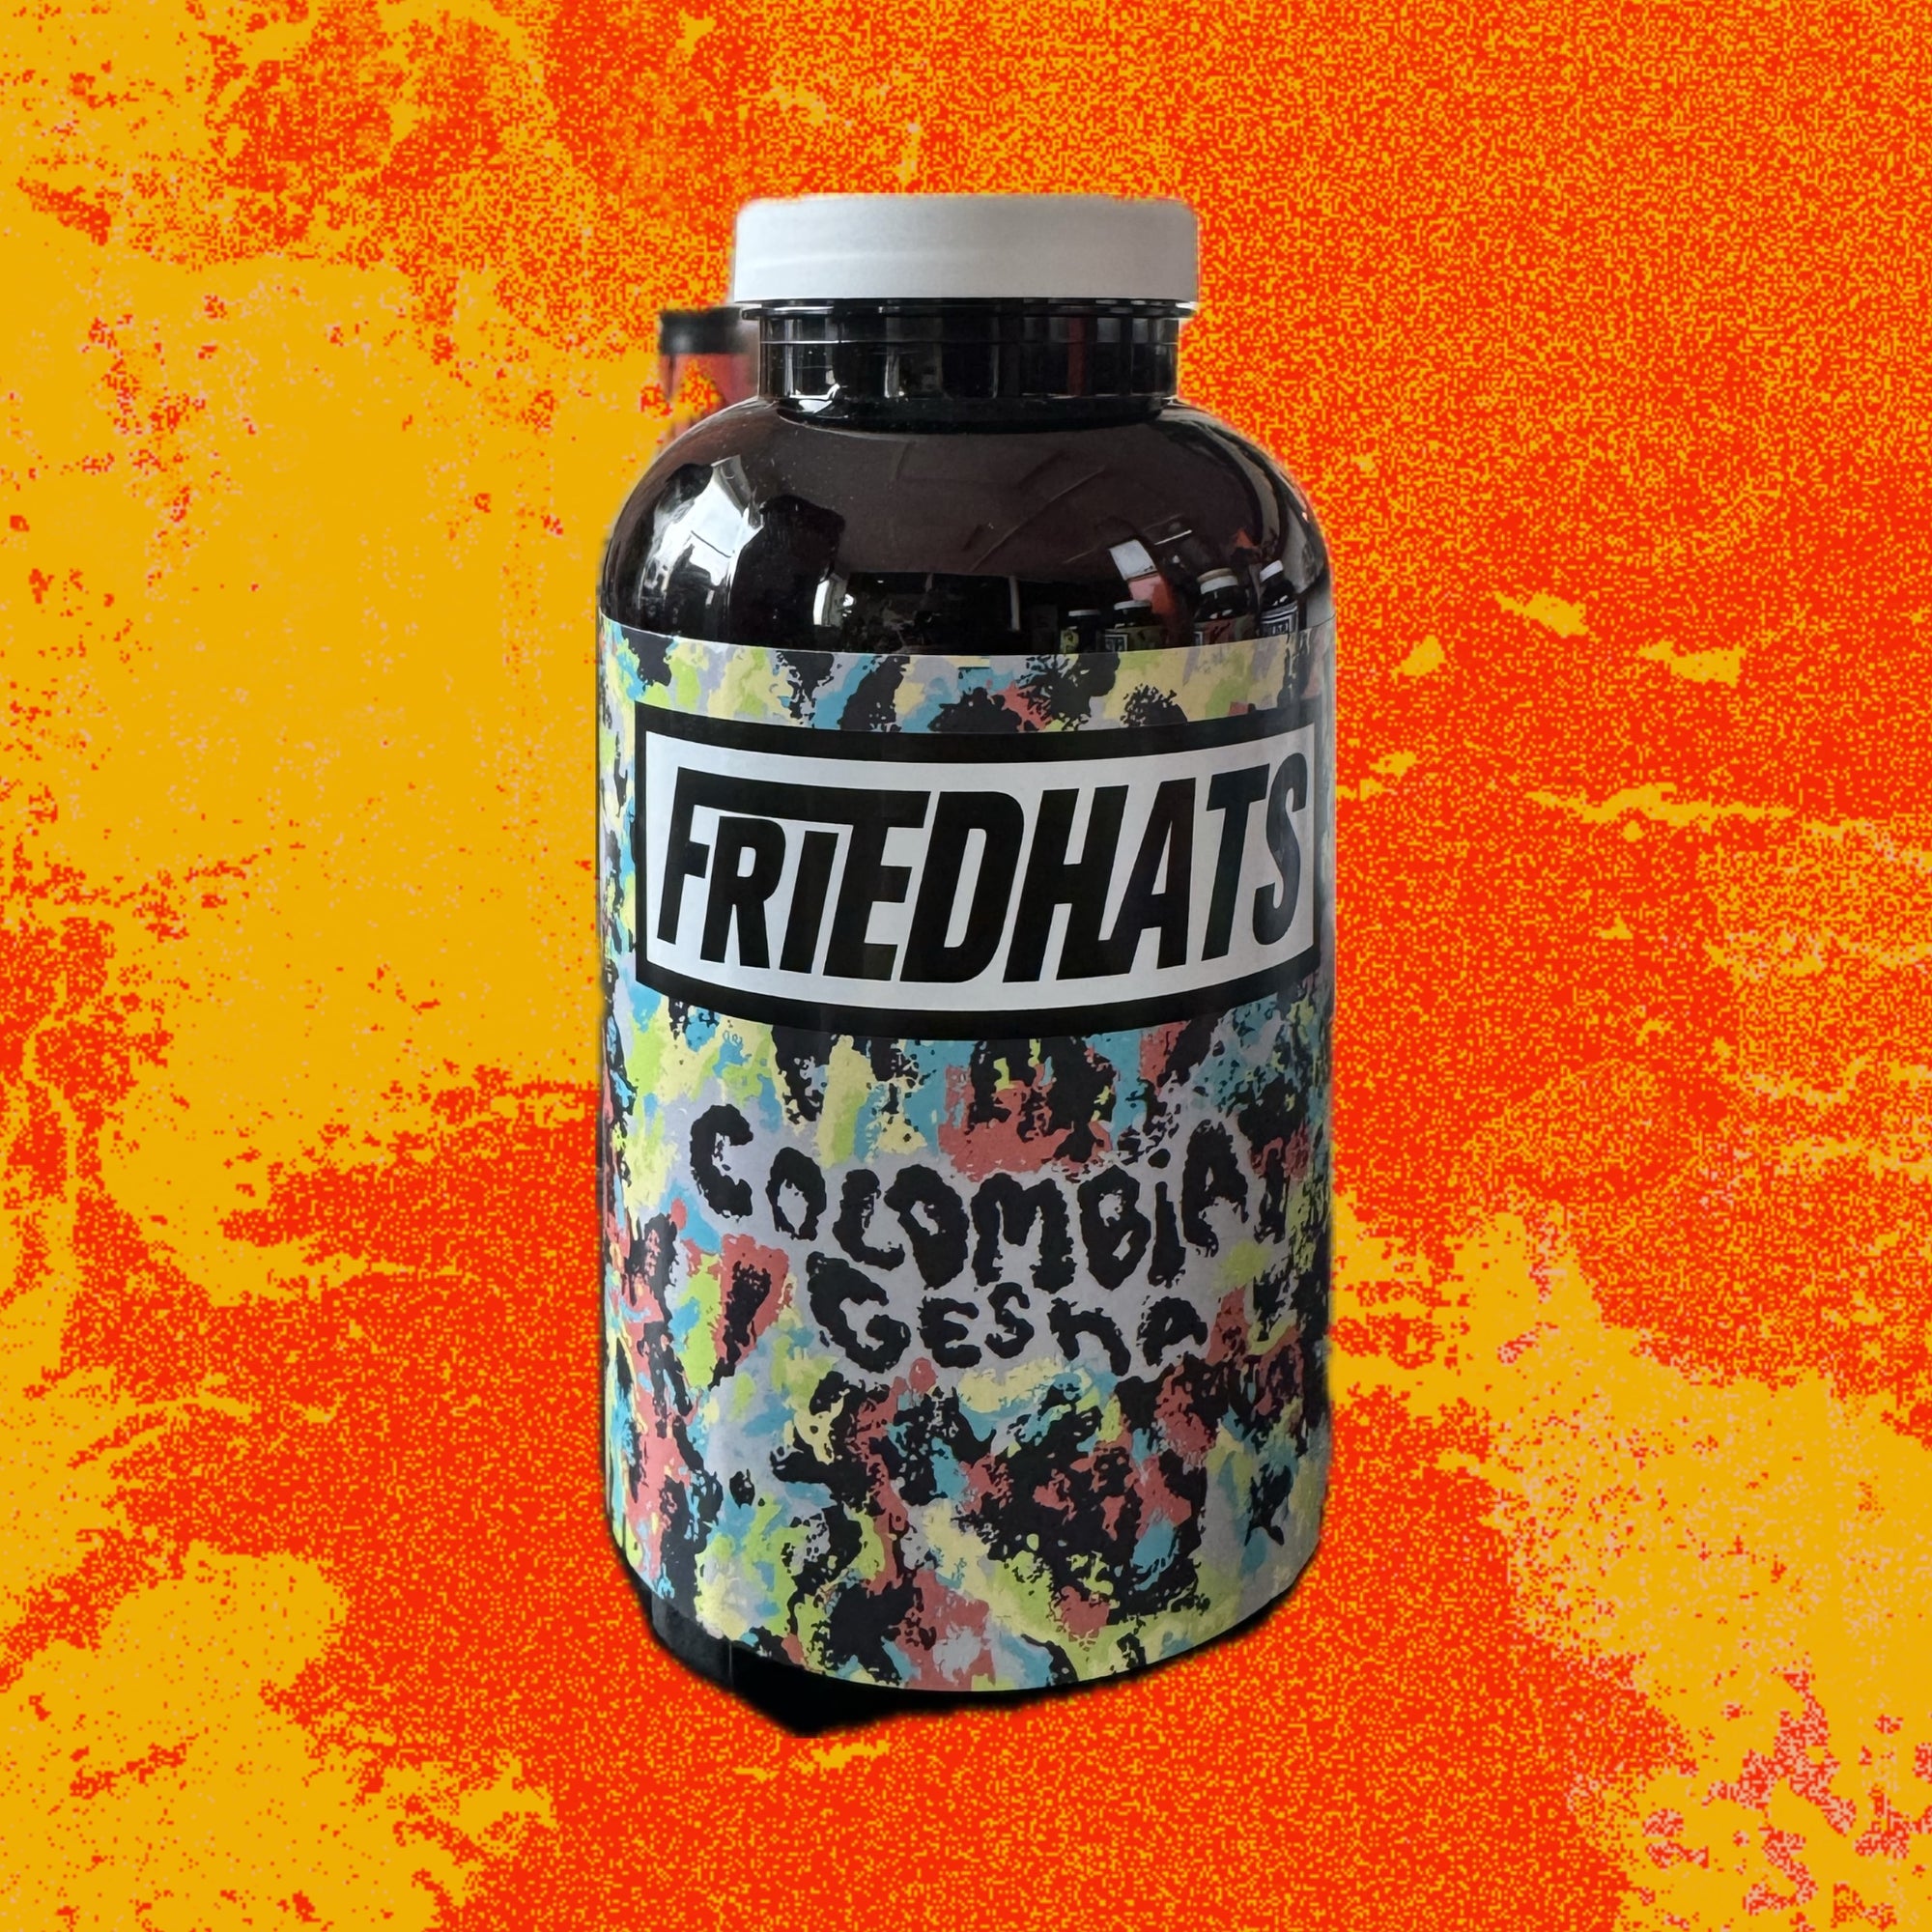 Friedhats - Colombia gesha